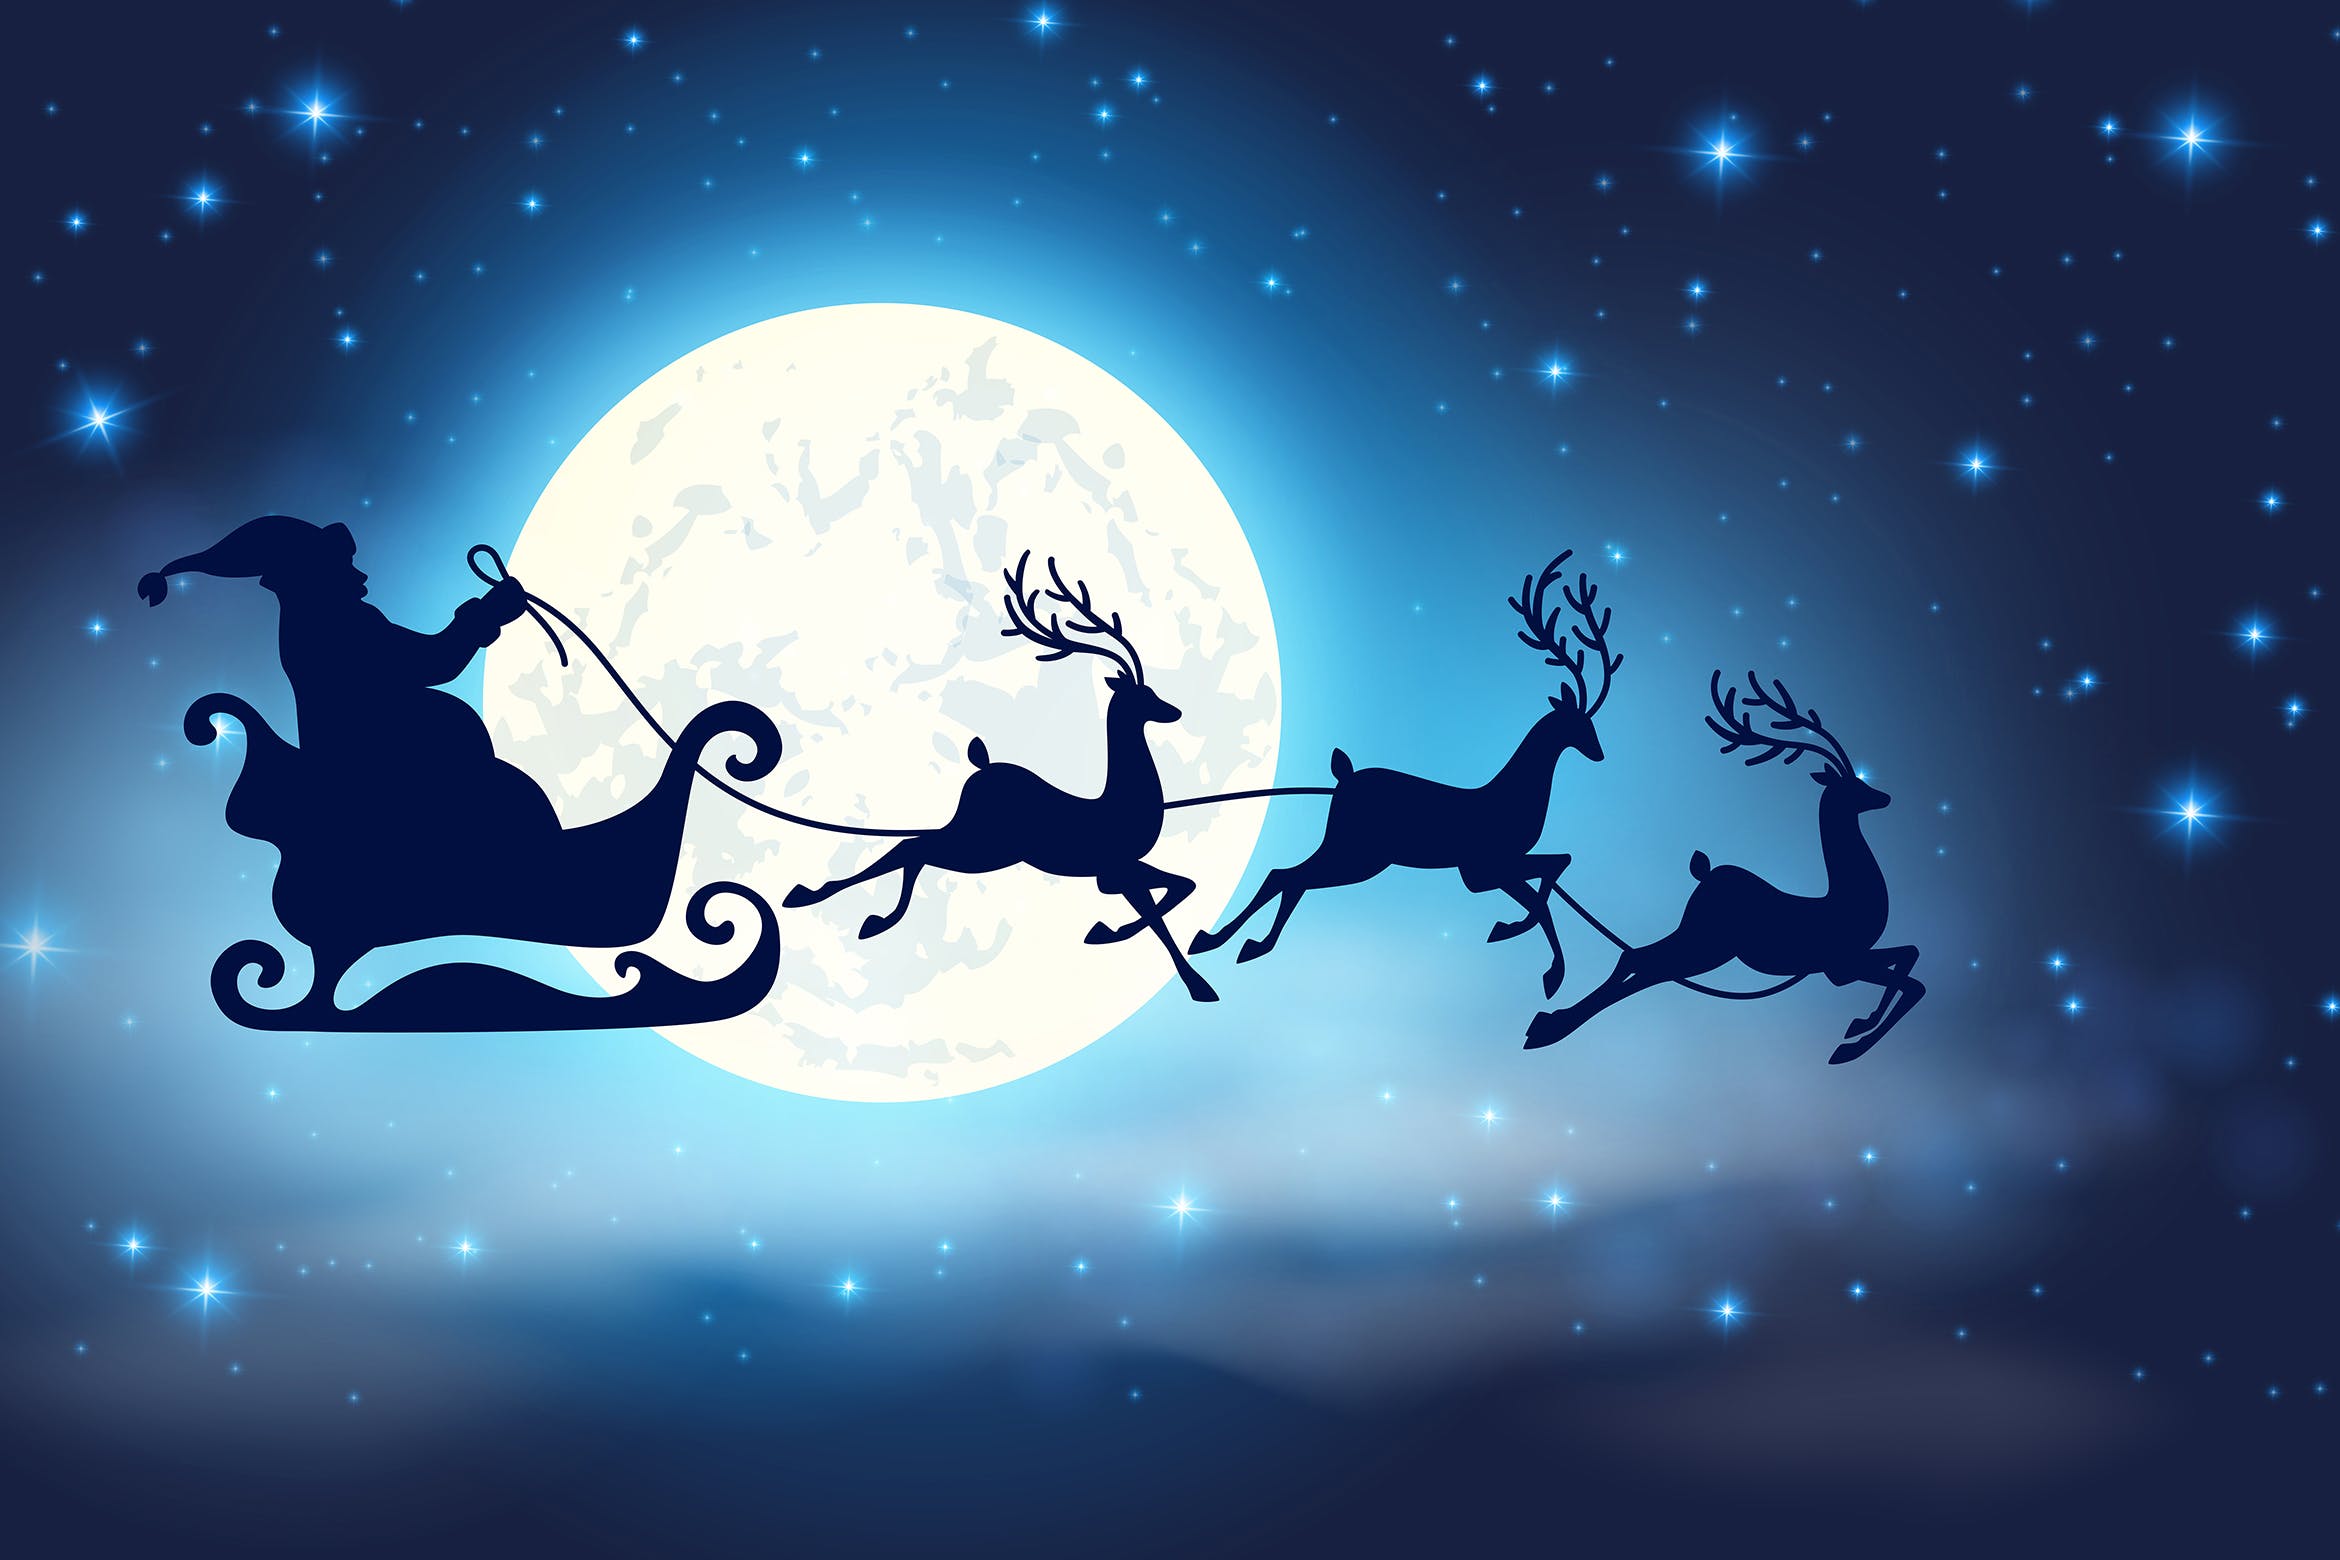 月光下的礼物圣诞老人矢量手绘插画素材 Christmas card with Santa Claus and Deer插图